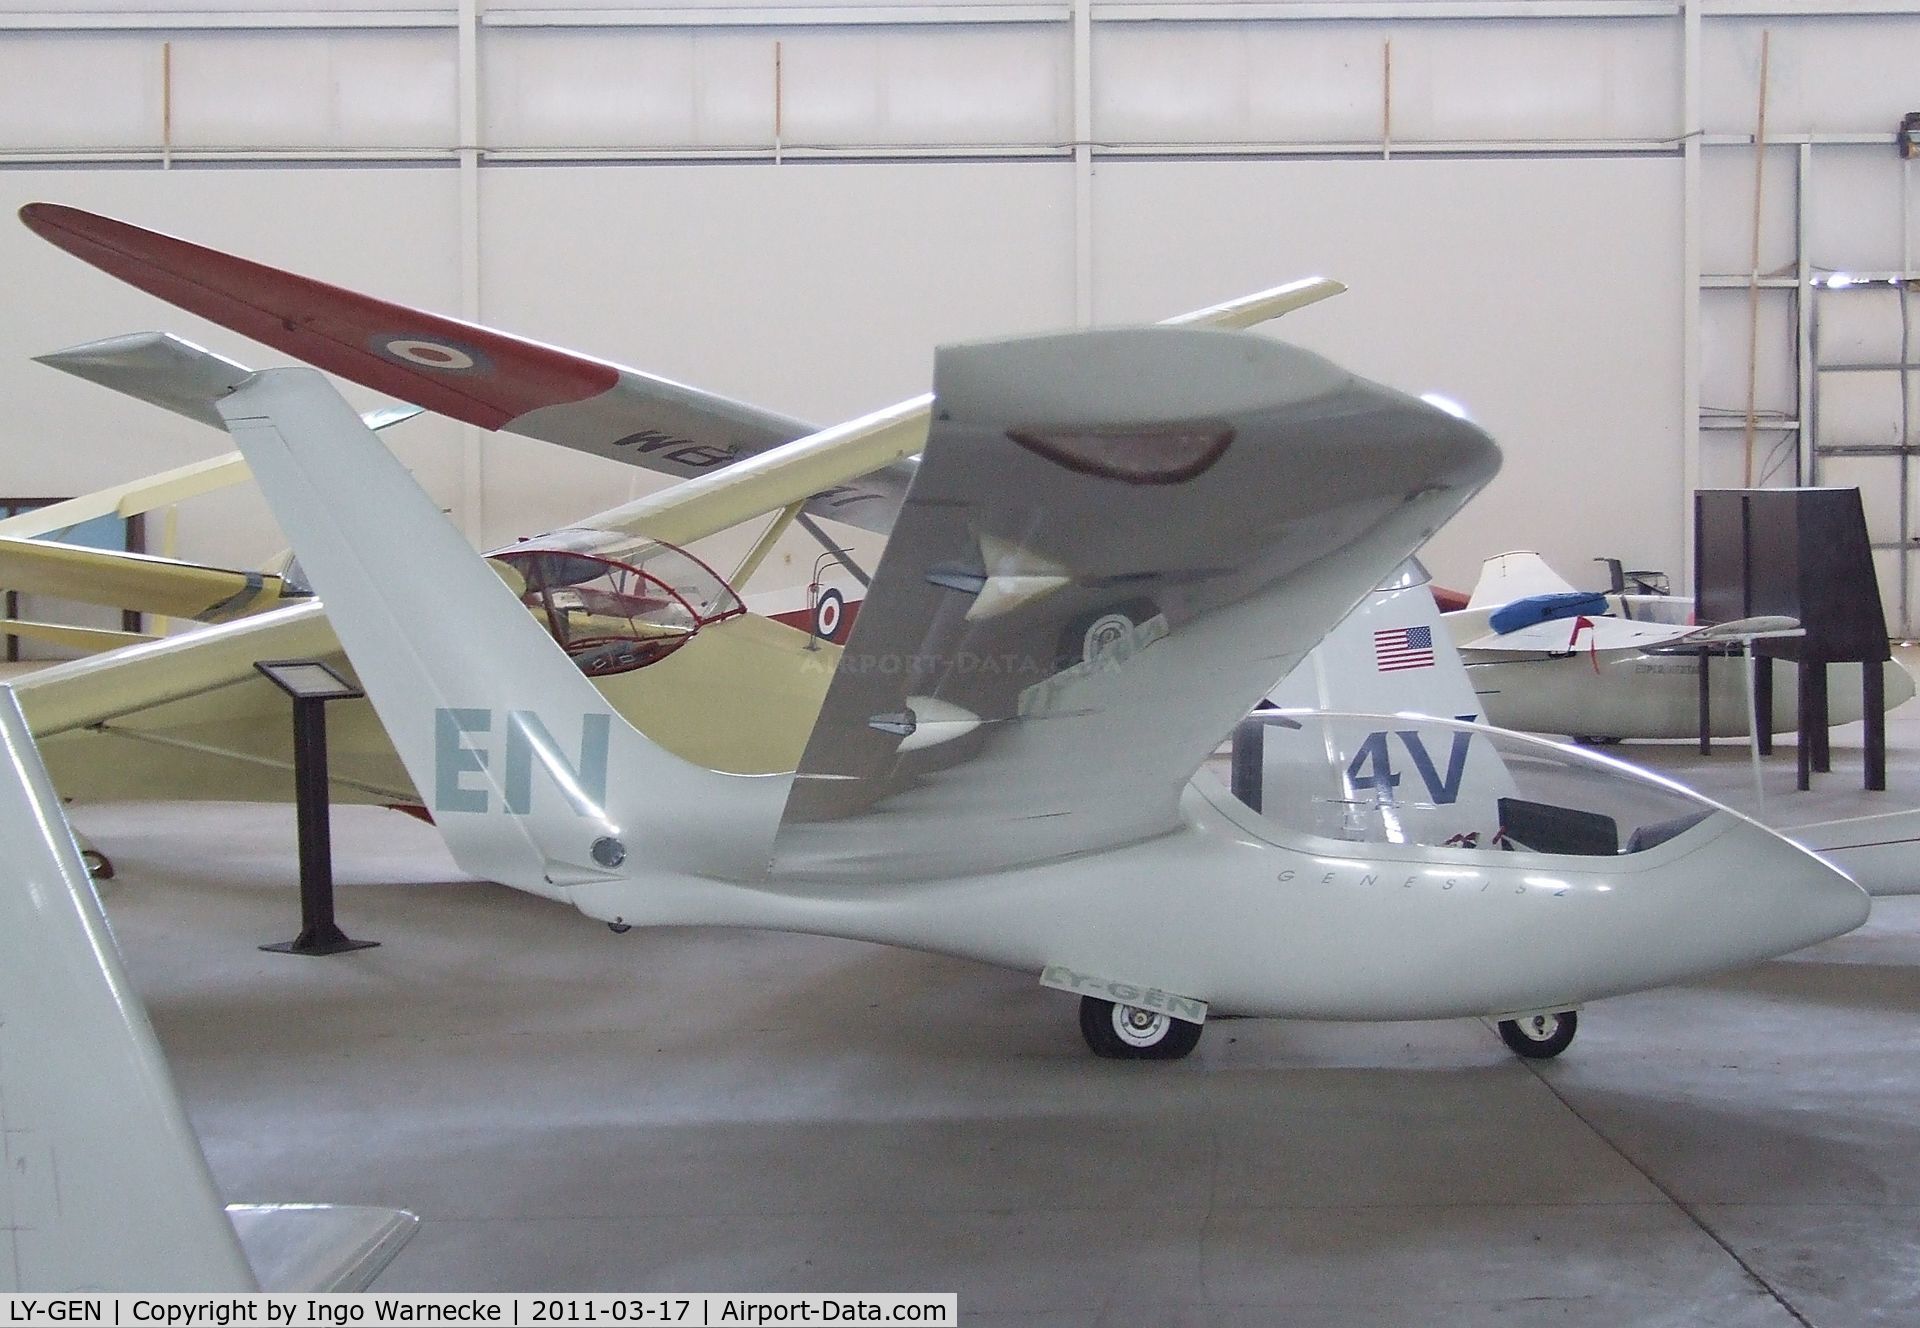 LY-GEN, Sportine Aviacija Genesis 2 C/N 001, Sportine Aviacija Genesis 2 at the Southwest Soaring Museum, Moriarty, NM